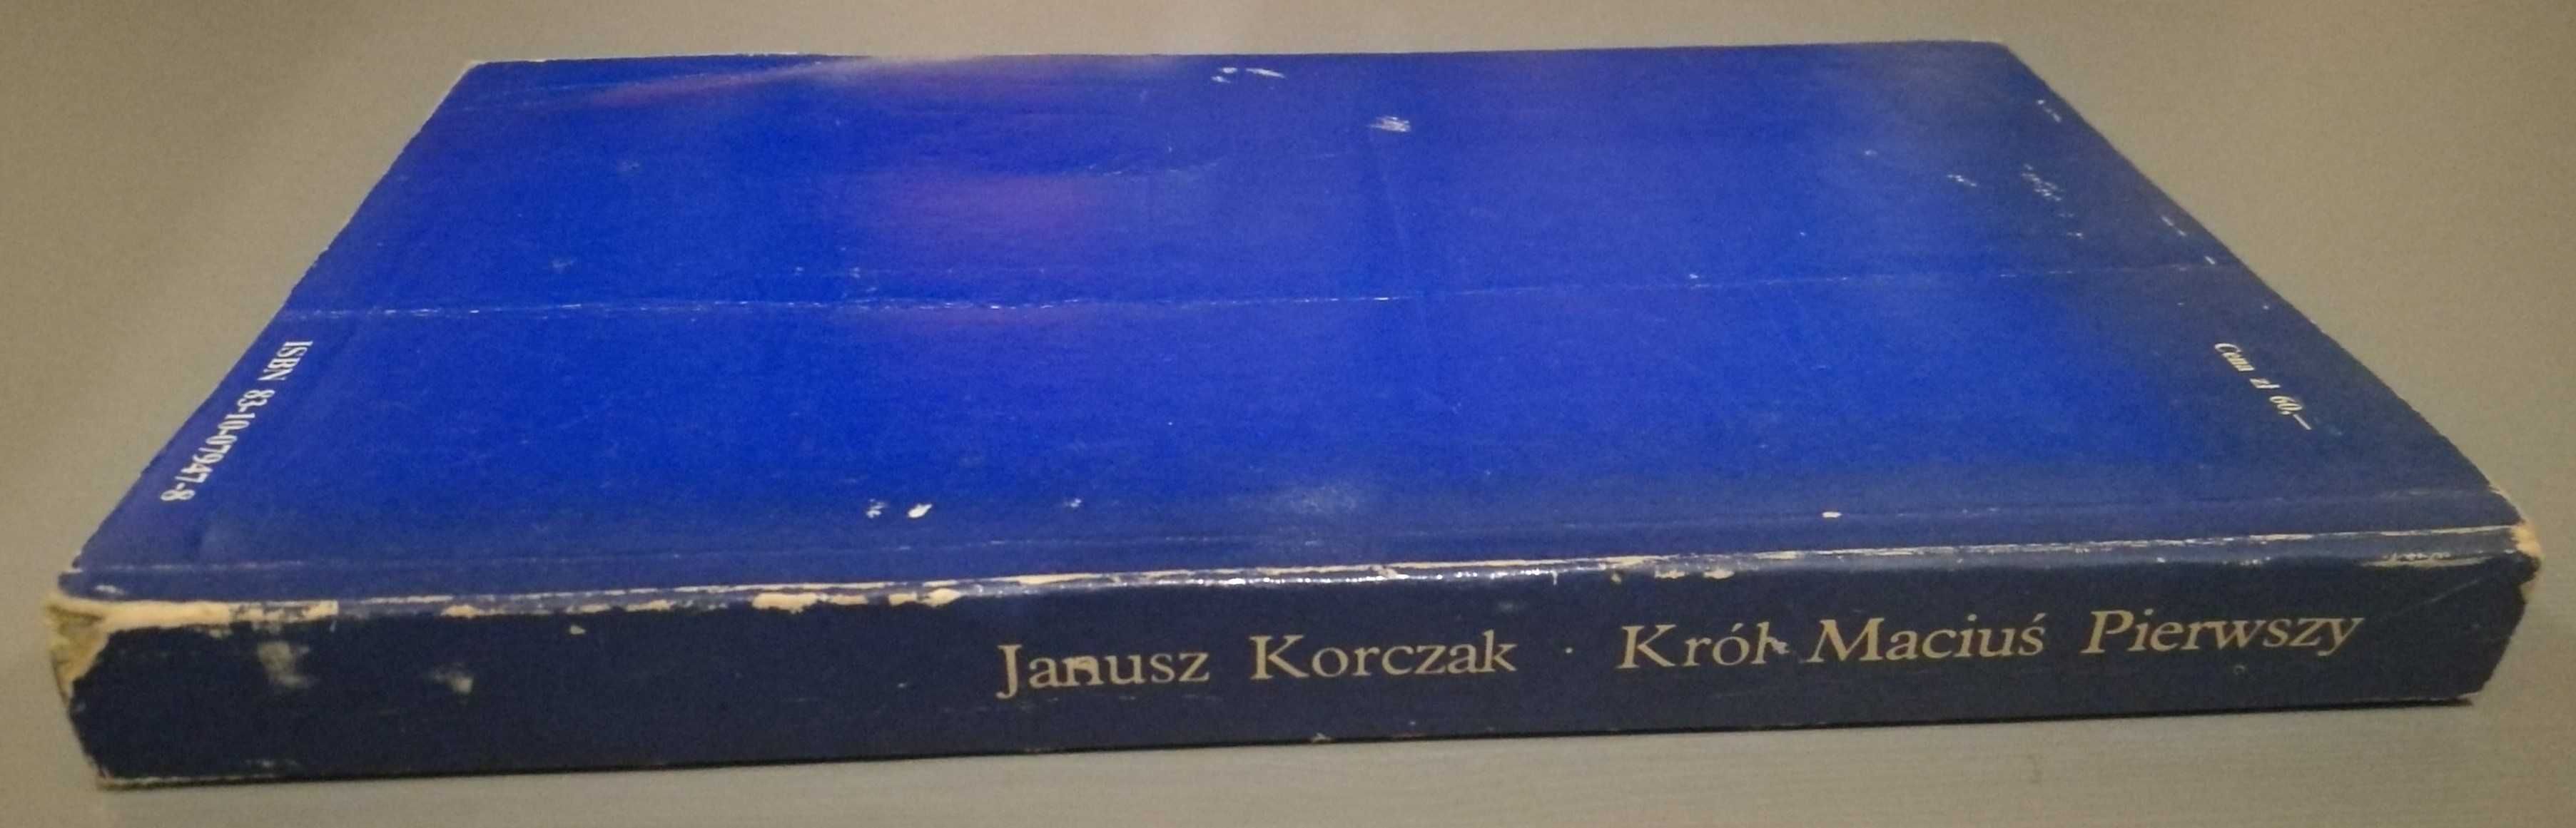 Król Maciuś Pierwszy  Janusz Korczak